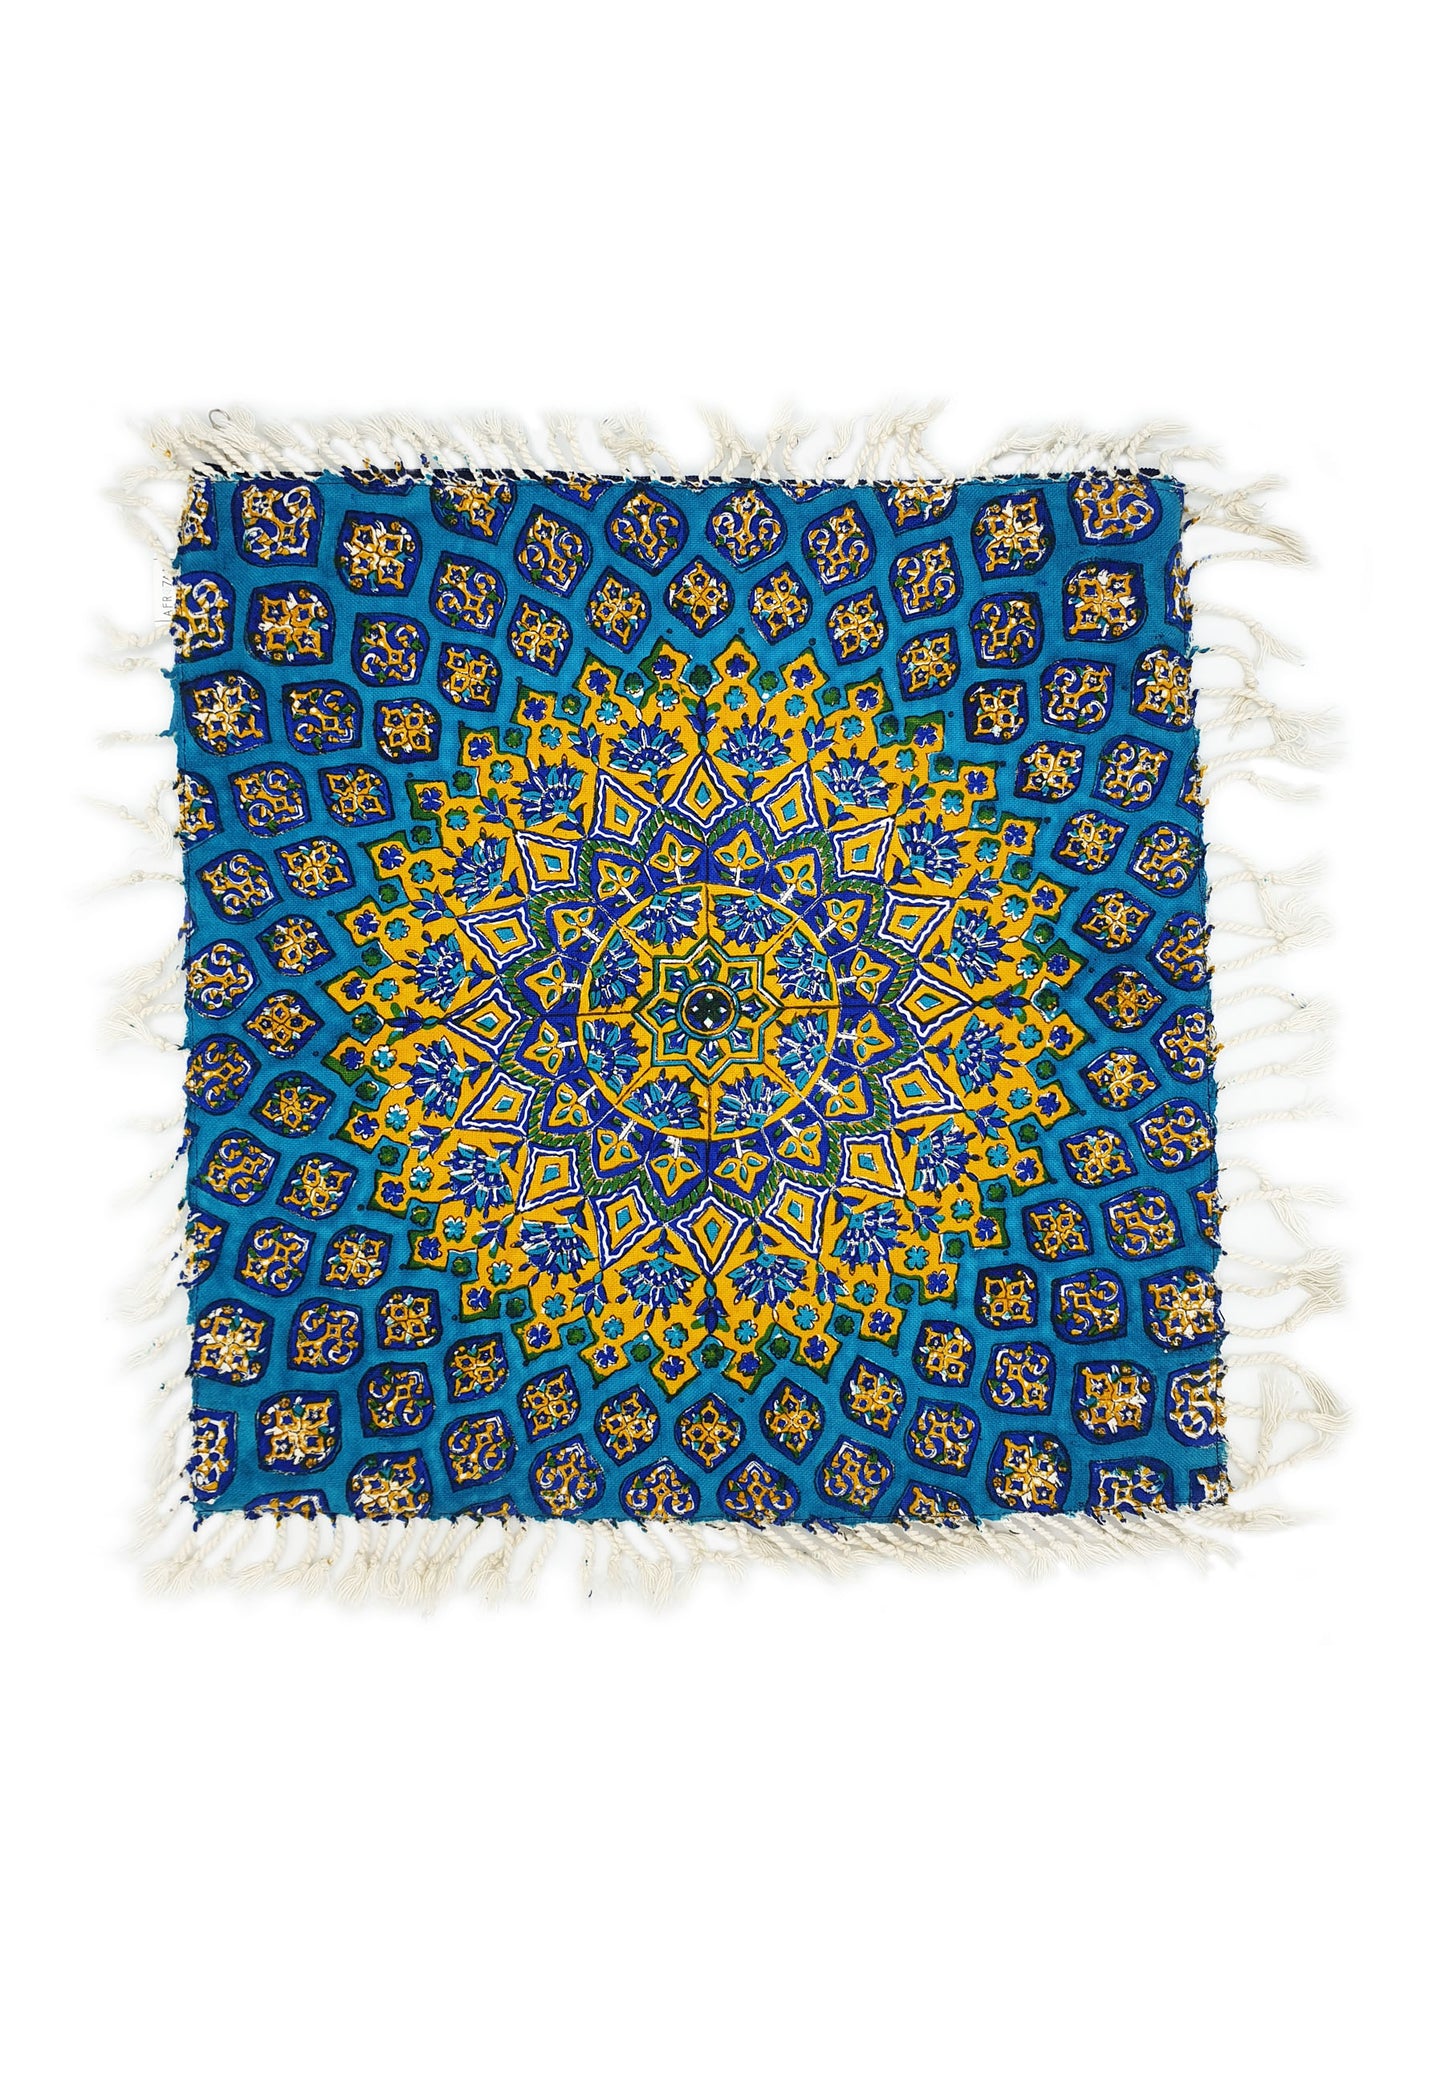 AFROZAN Hand-printed Cushion Cover - Peisly Isfahan